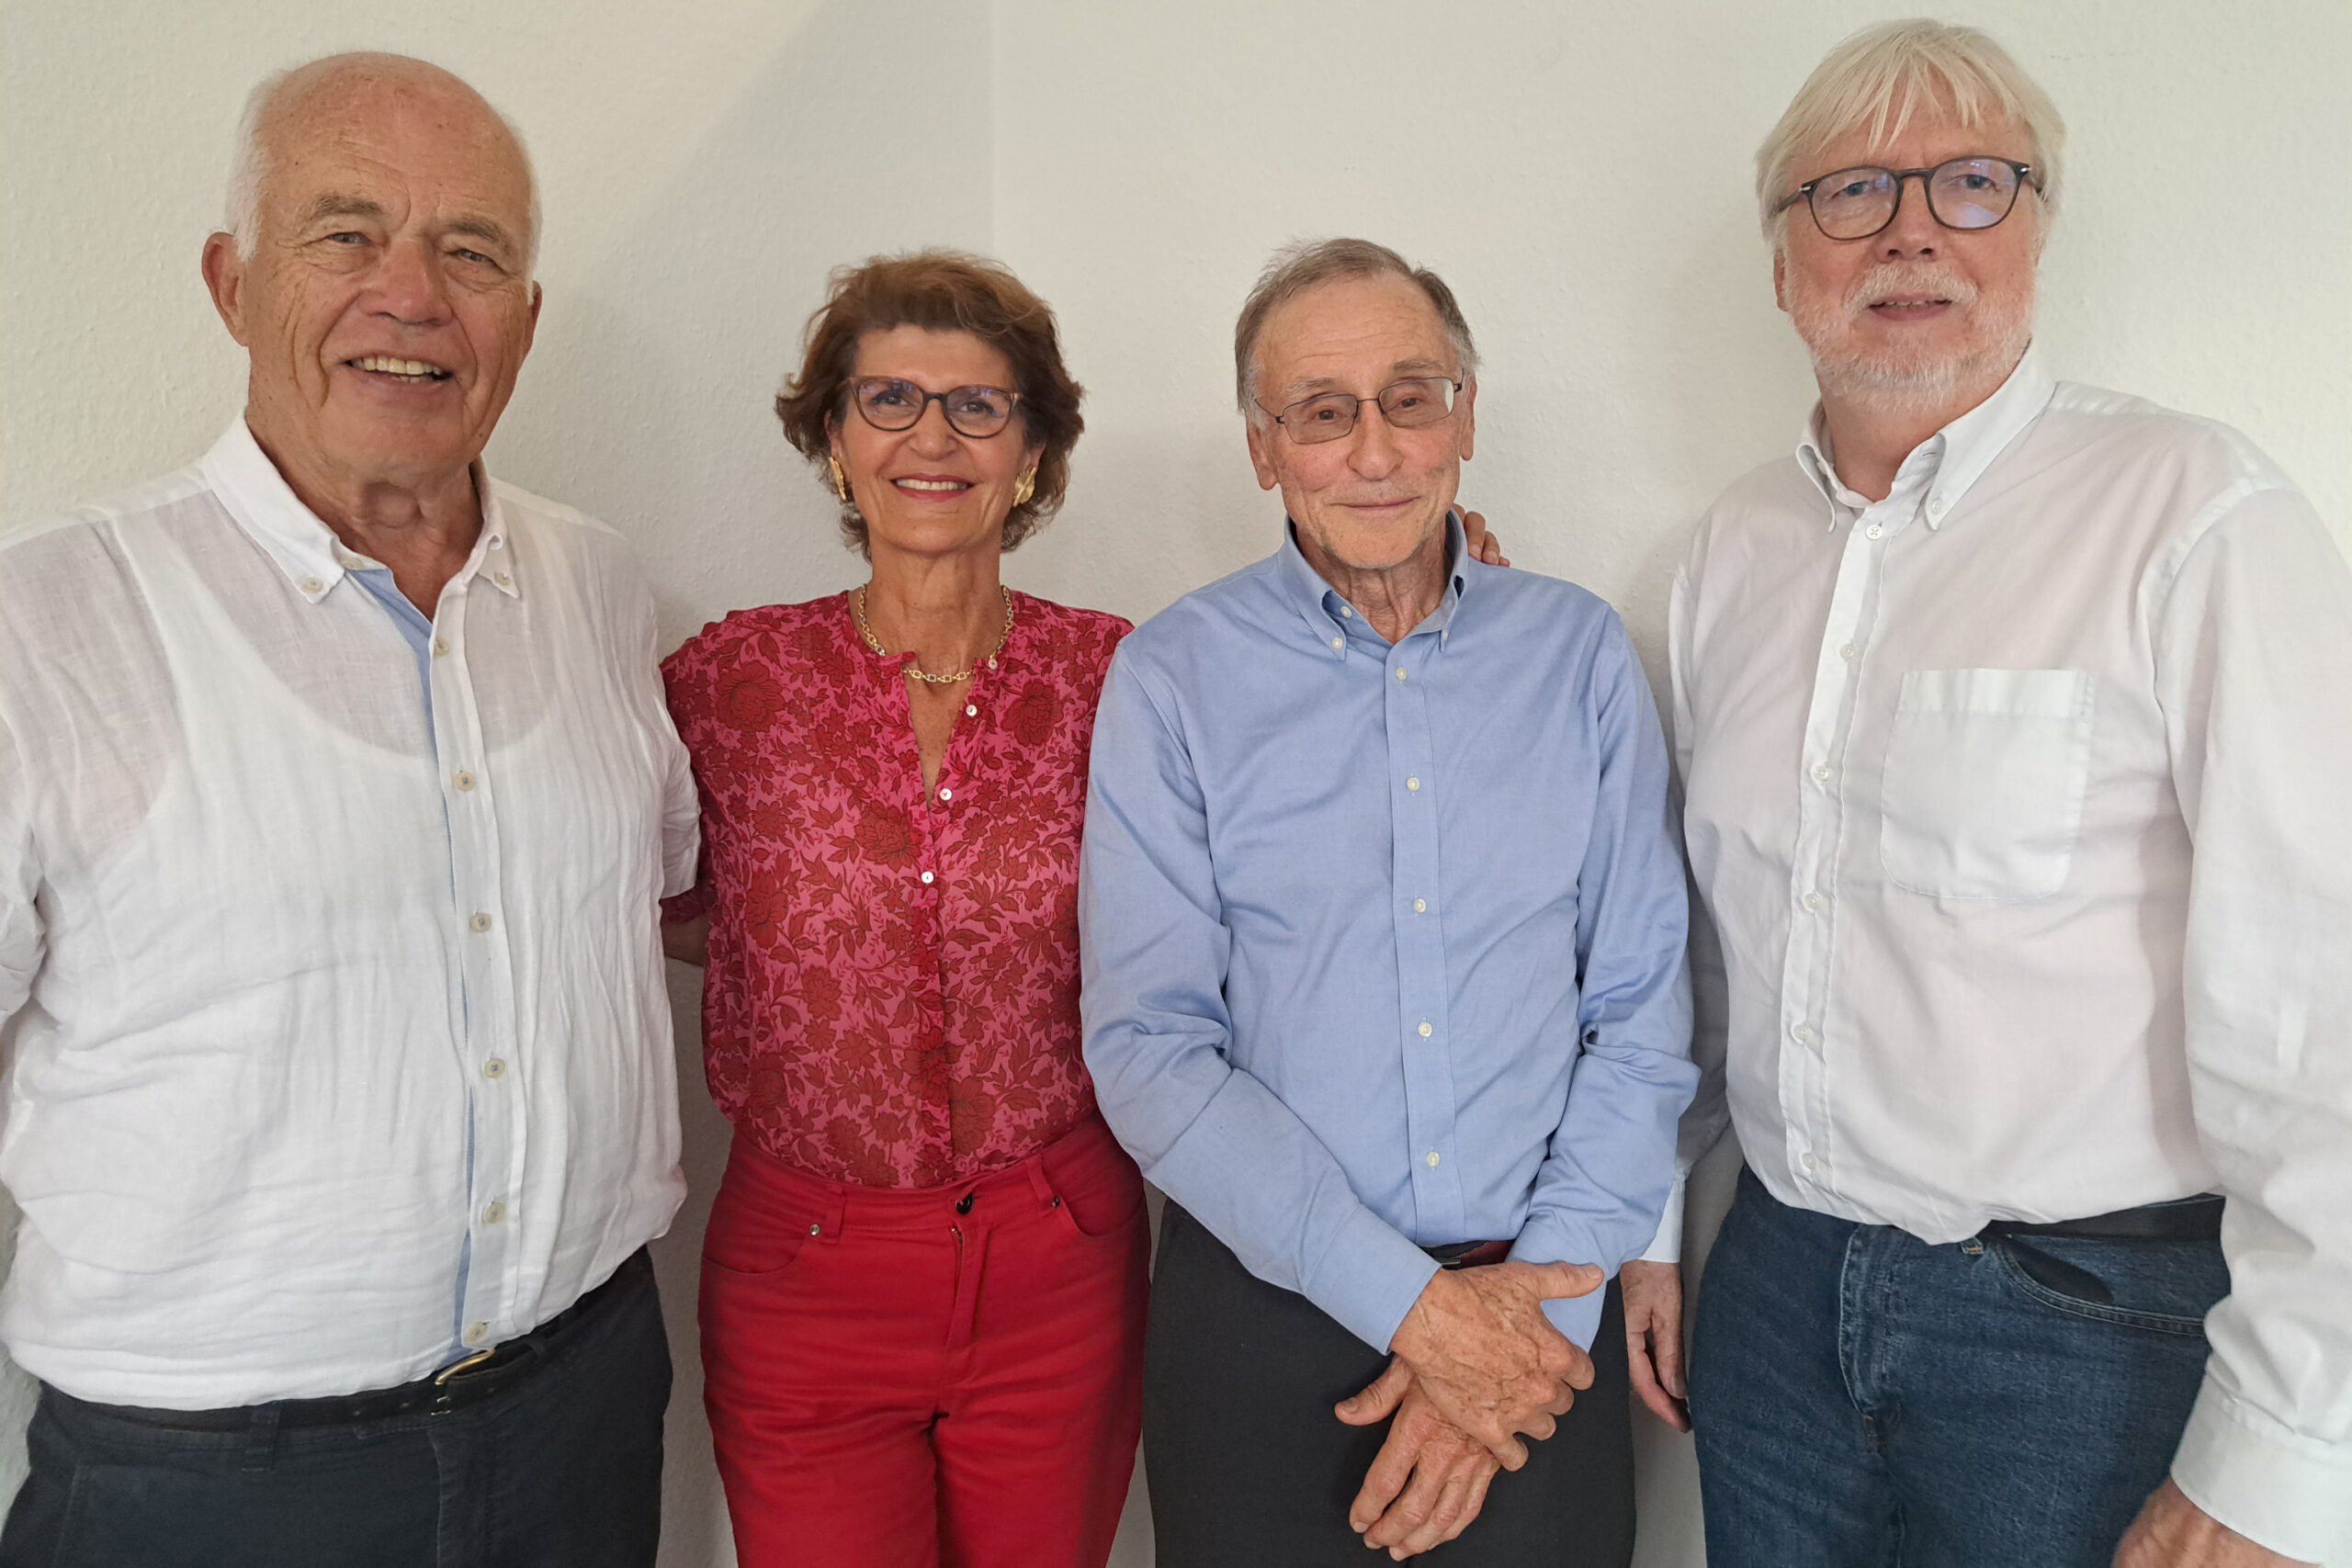 The PTF Europe Board - Franz Kaps, Haleh Bridi, Lars Jeurling, and Erich Unterwurzacher